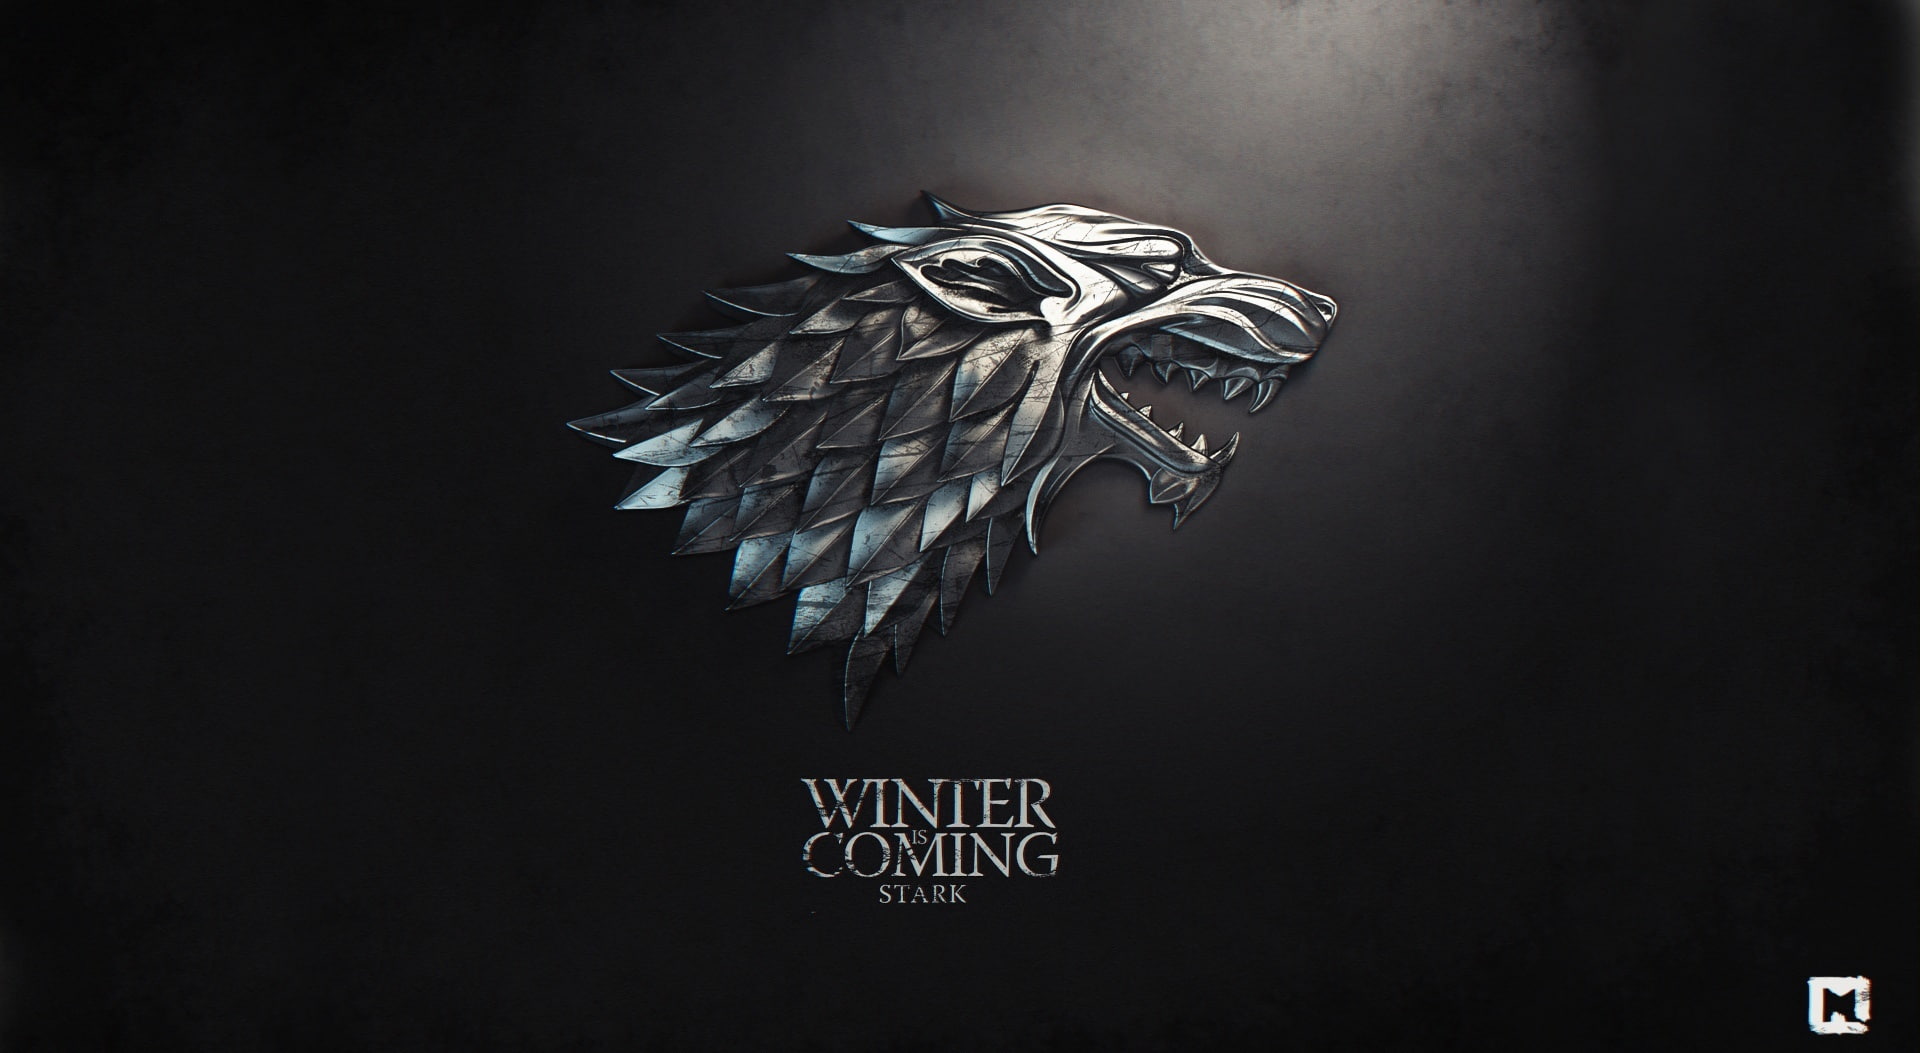 Game Of Thrones Winter Is Coming Stark, Winter Coming The Game of Thrones wallpaper